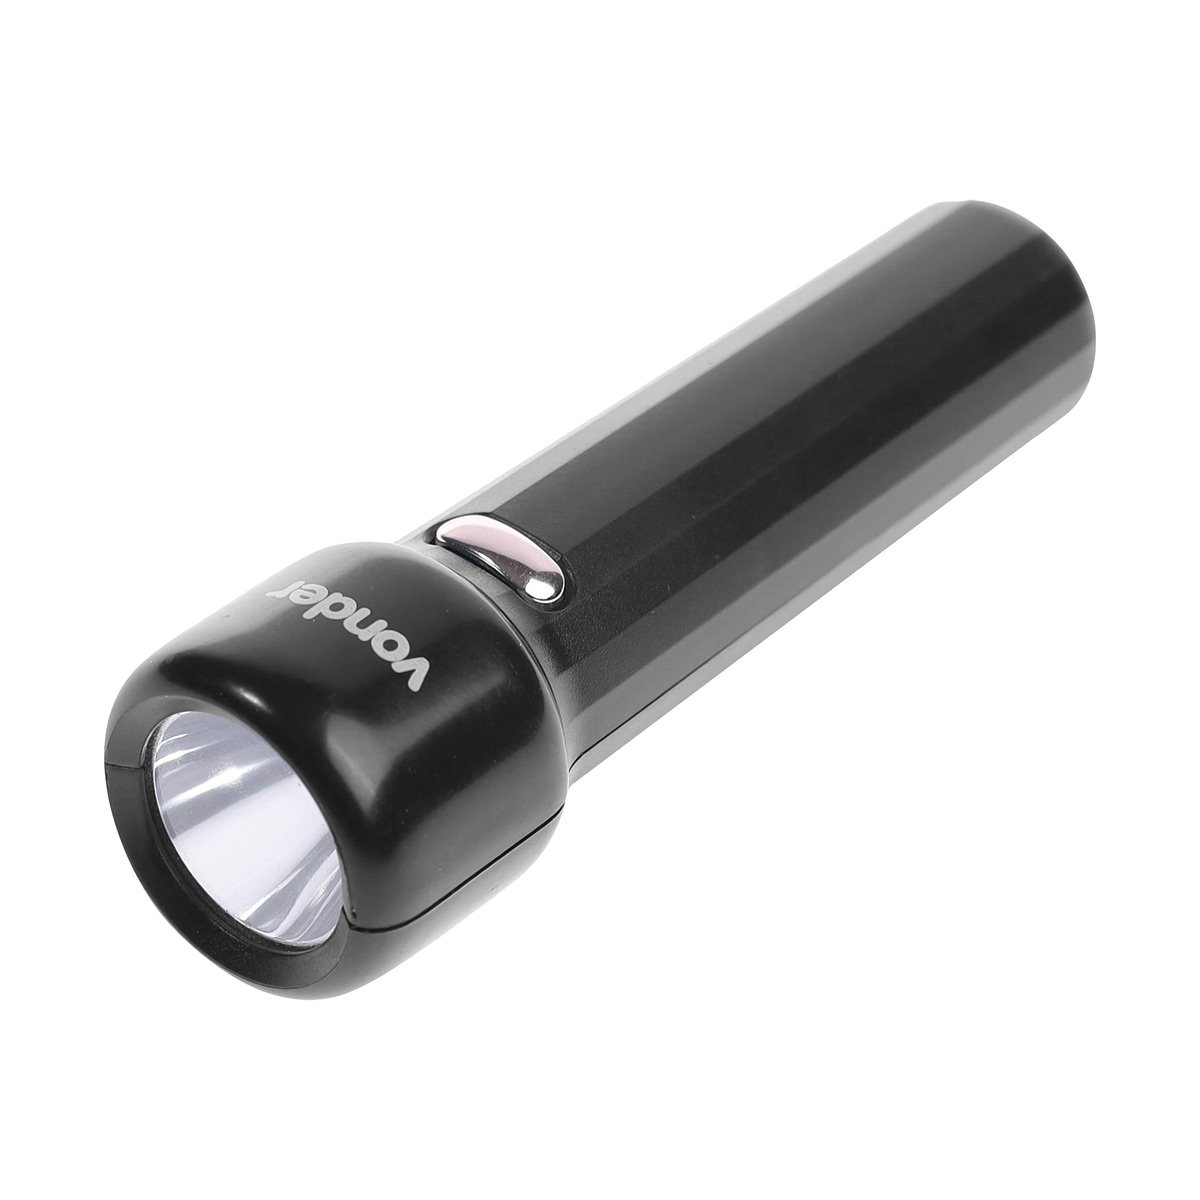 Mini Lanterna LED Recarregável USB 1 Watt 50 Lm Bateria de Lítio Vonder